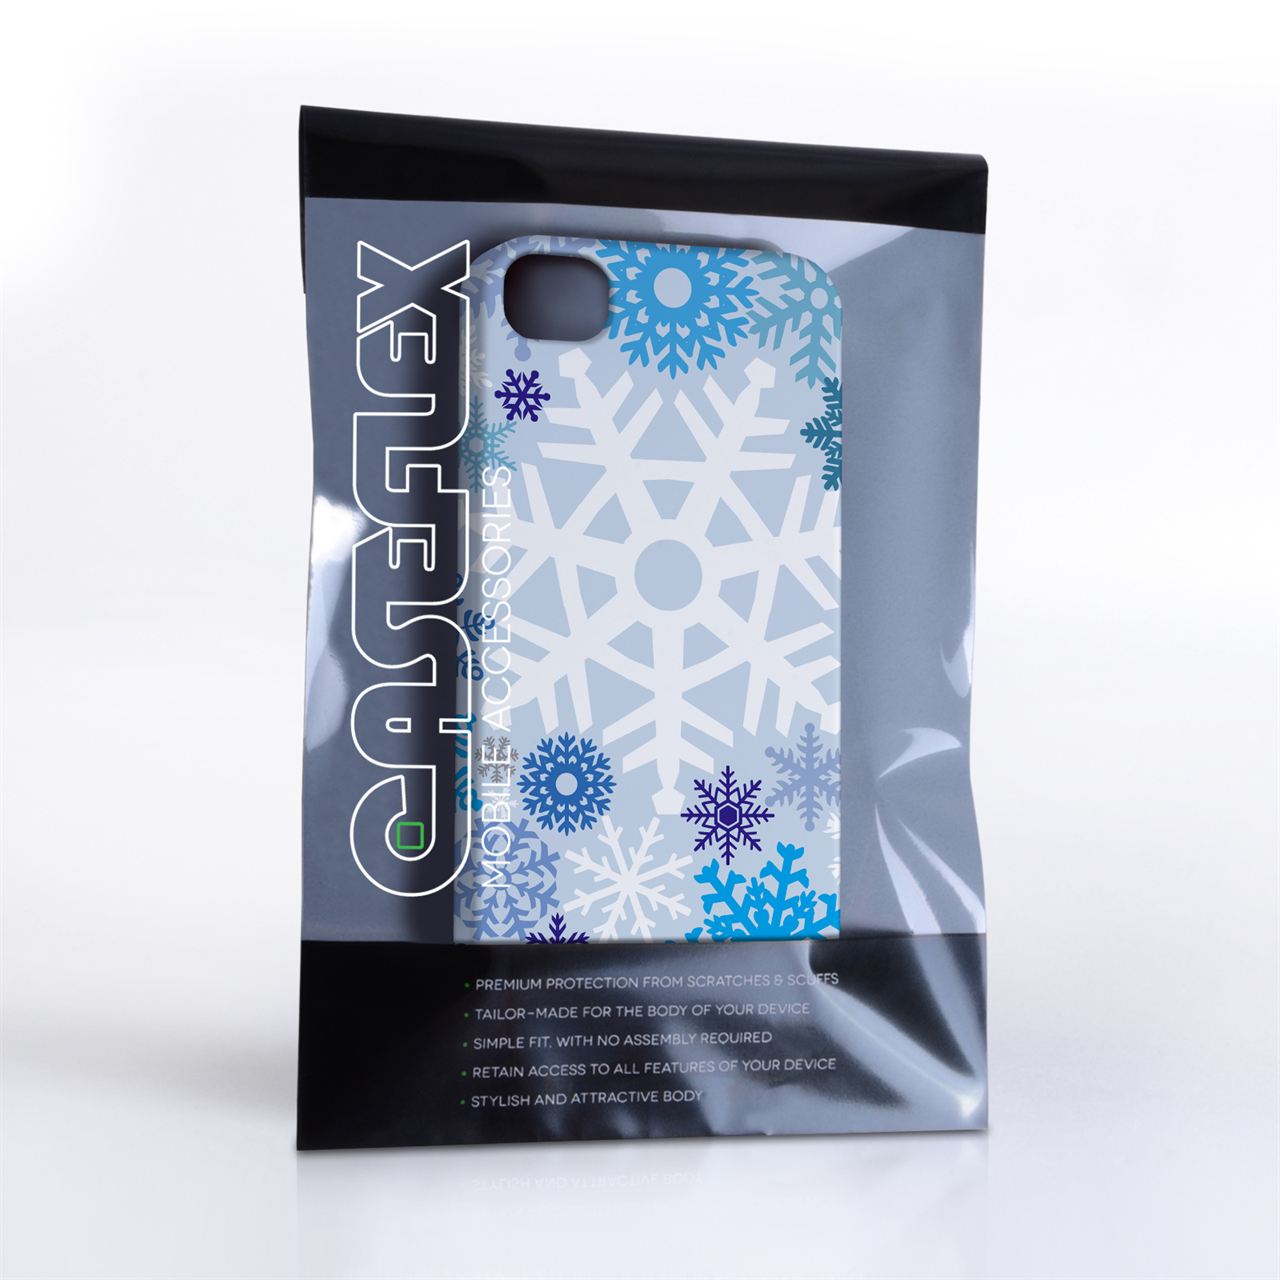 Caseflex iPhone 4 / 4S Winter Christmas Snowflake Cover – Blue